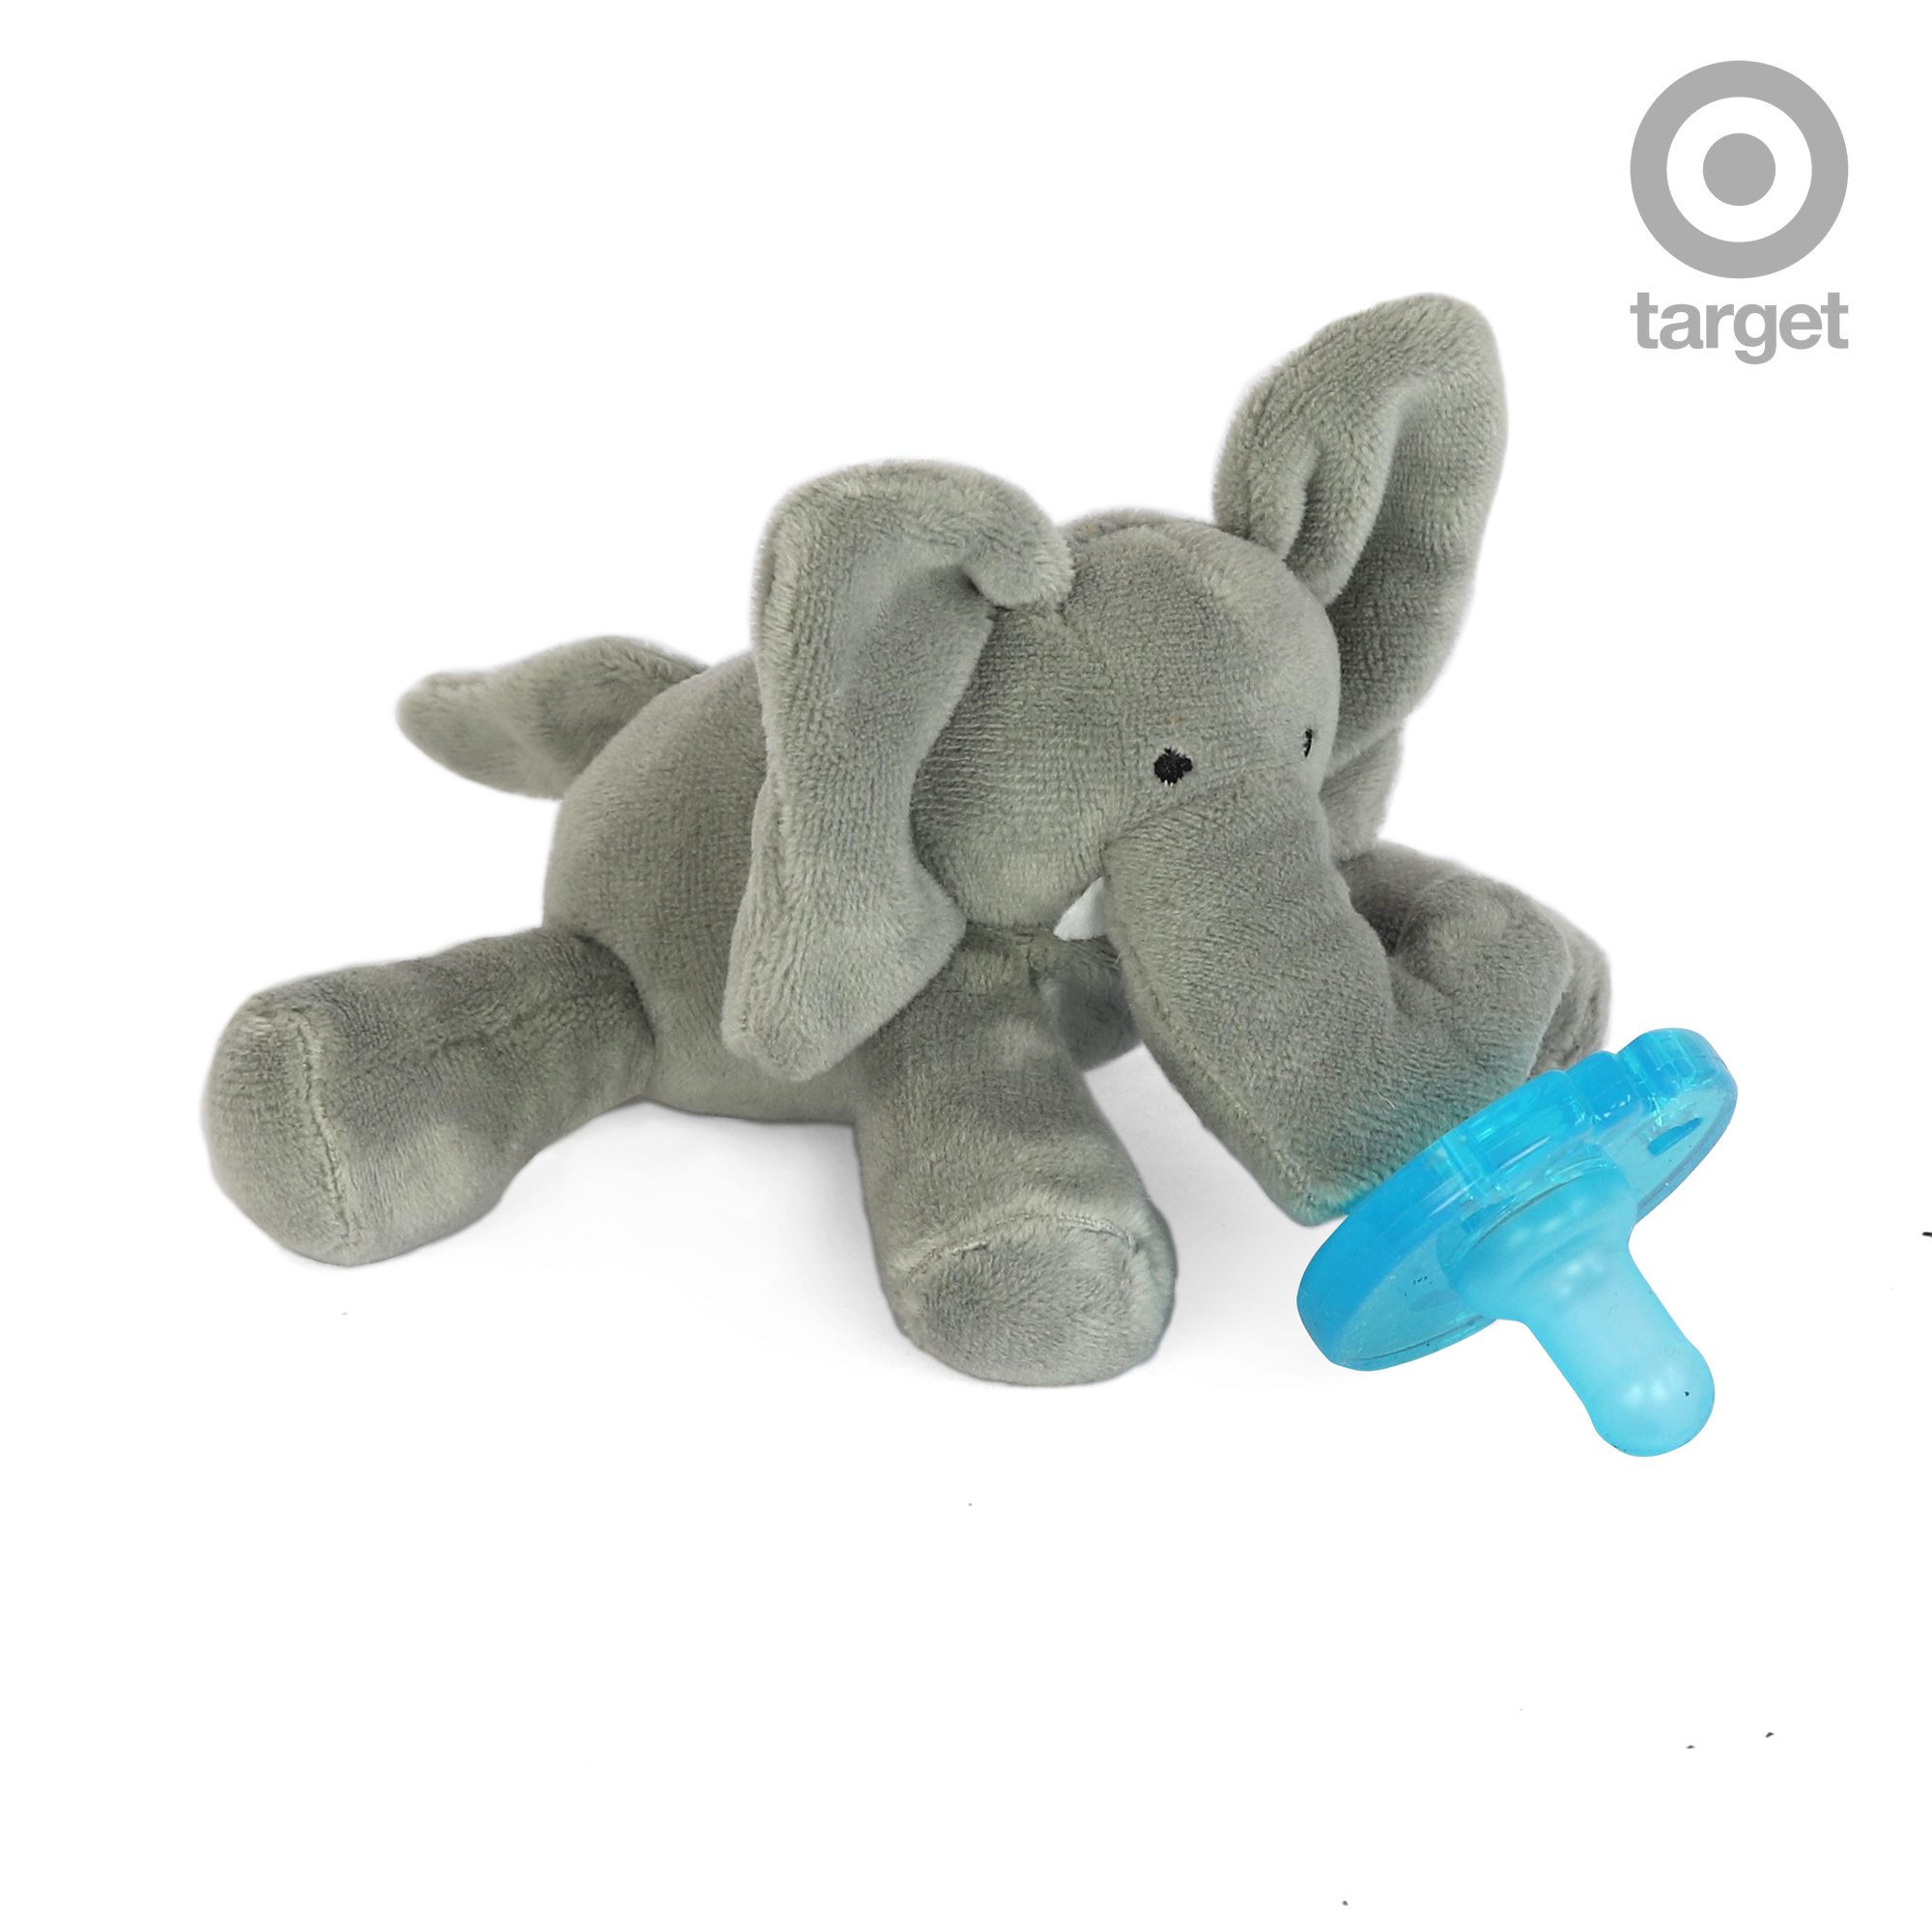 target-elephant-new-angle1-logo